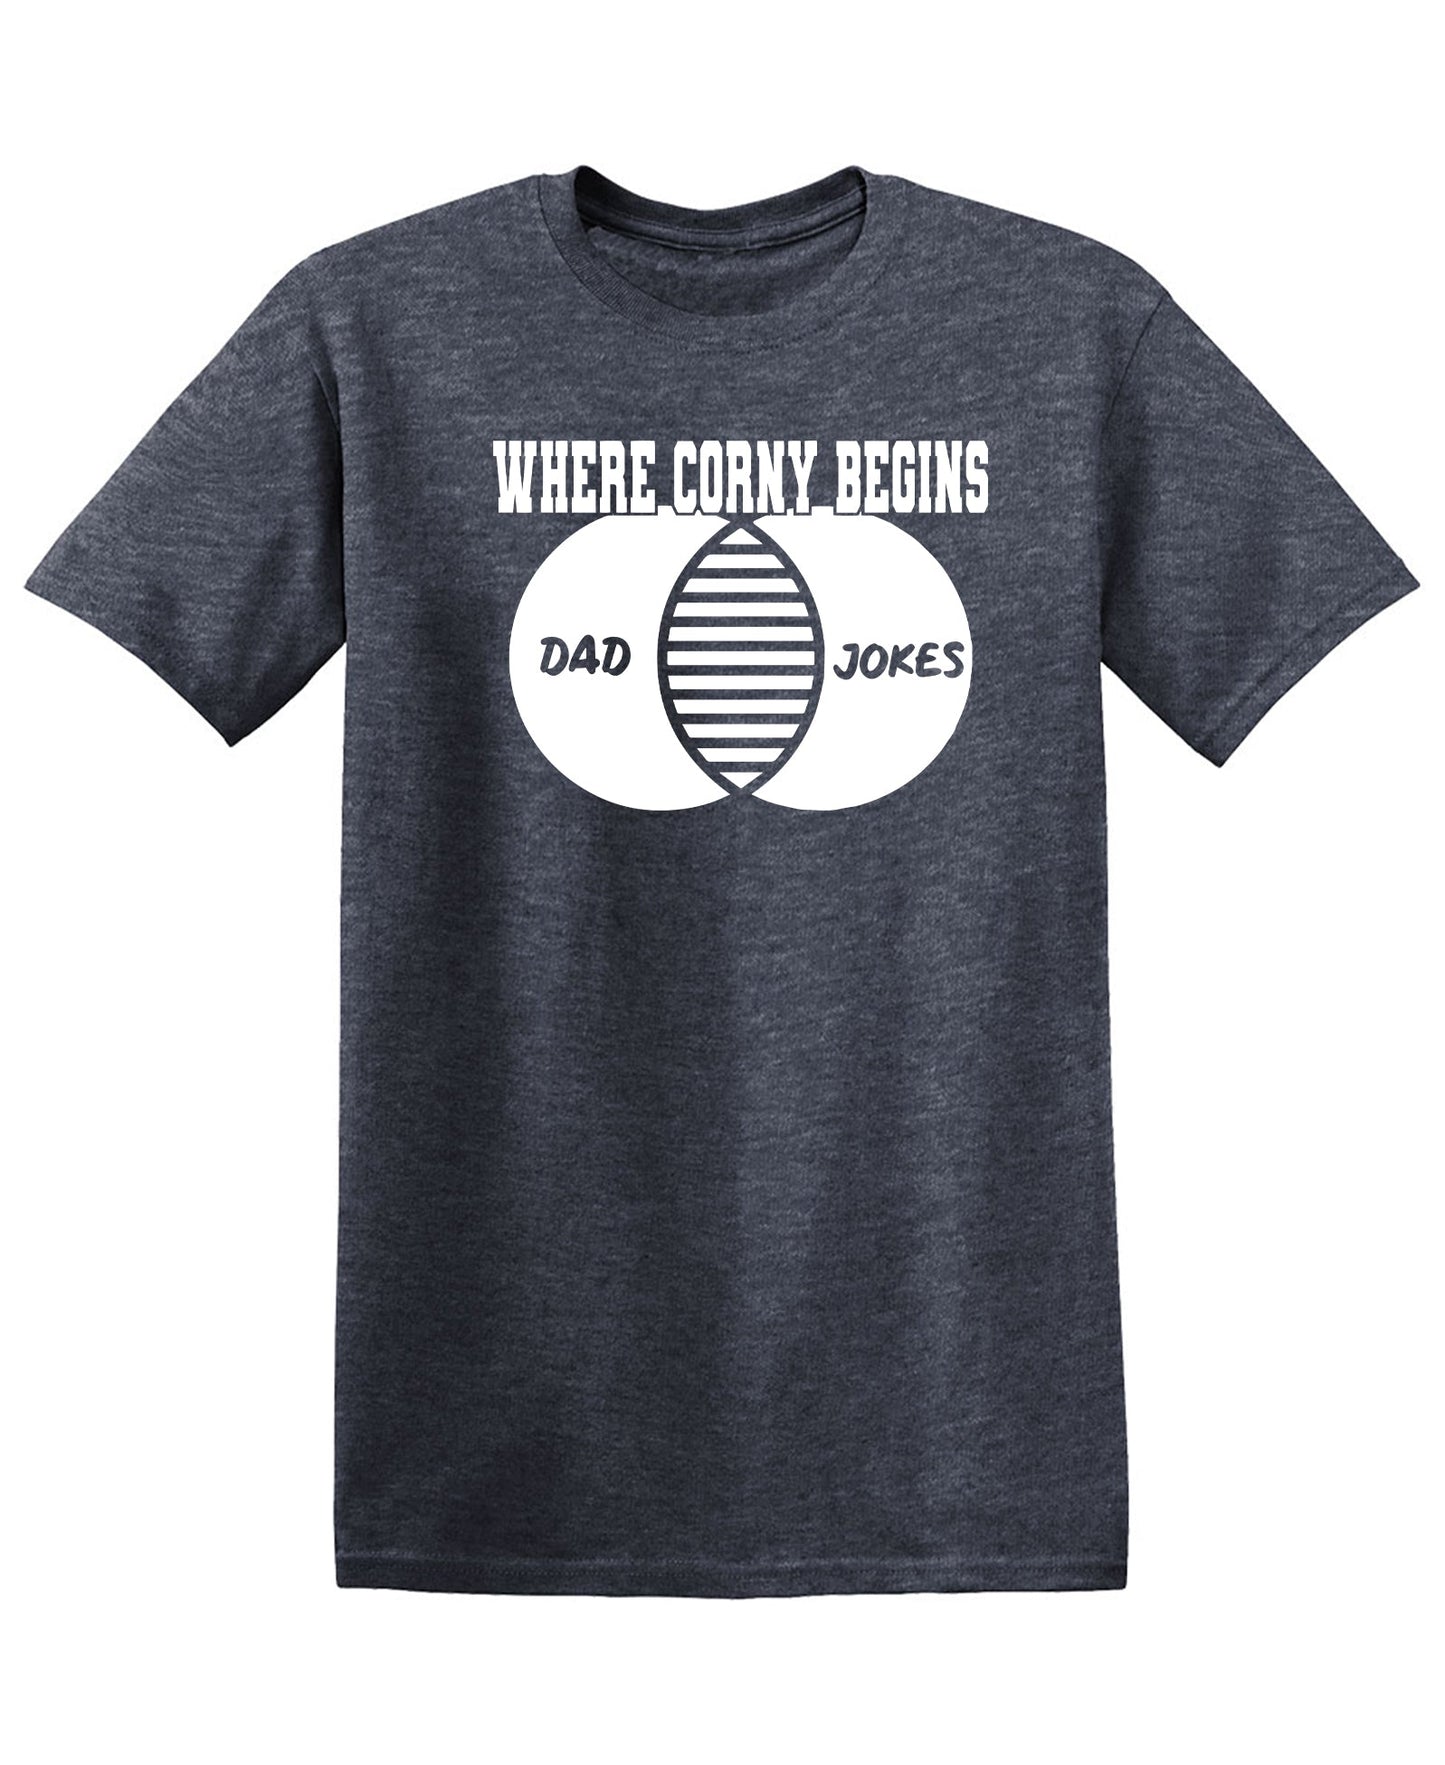 Where Corny Begins, Dad Jokes - Funny T Shirts & Graphic Tees